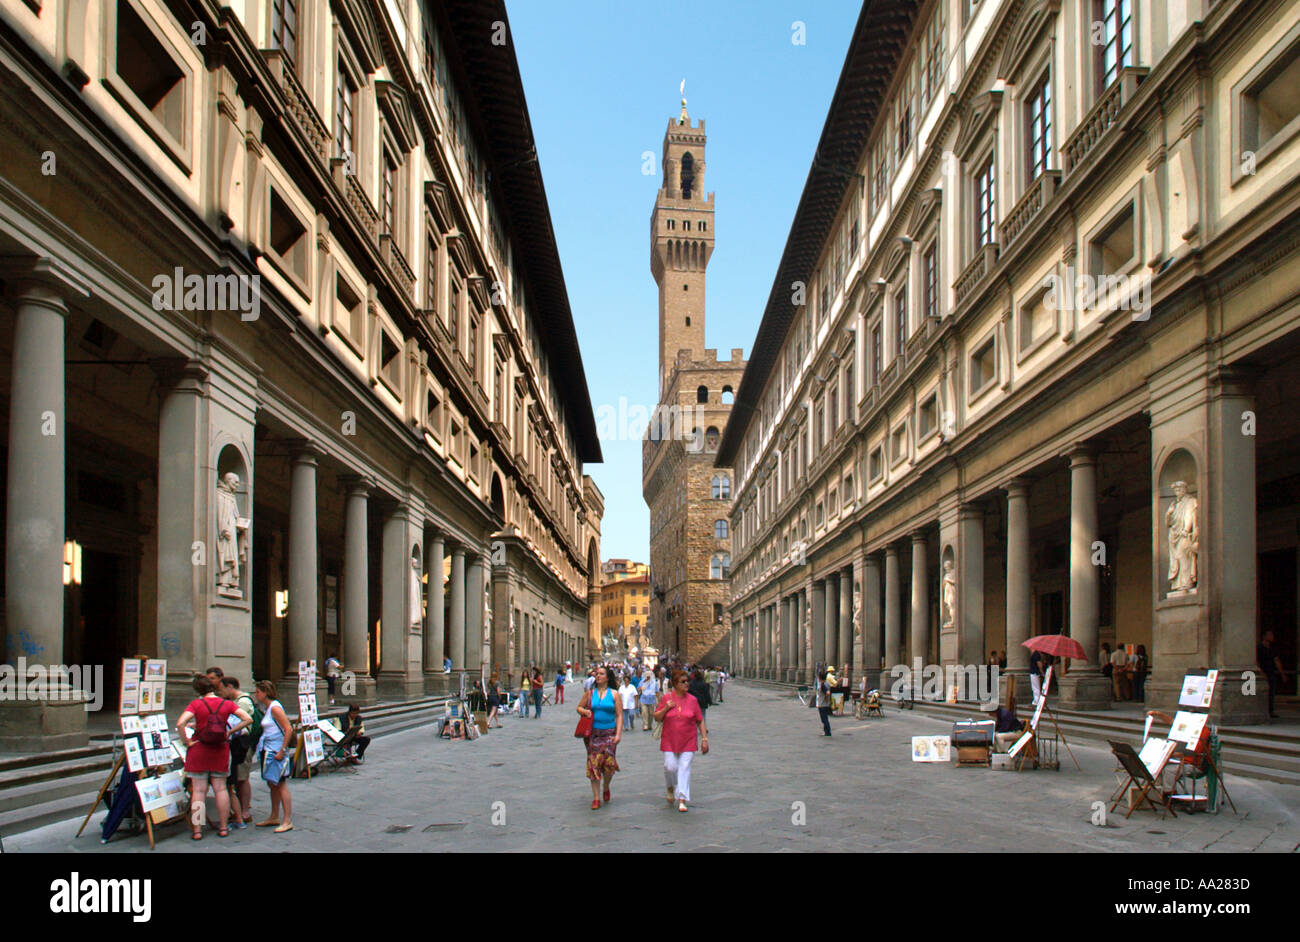 Uffizi Gallery with the Palazzo Vecchio behind, Florence, Tuscany, Italy  Stock Photo - Alamy